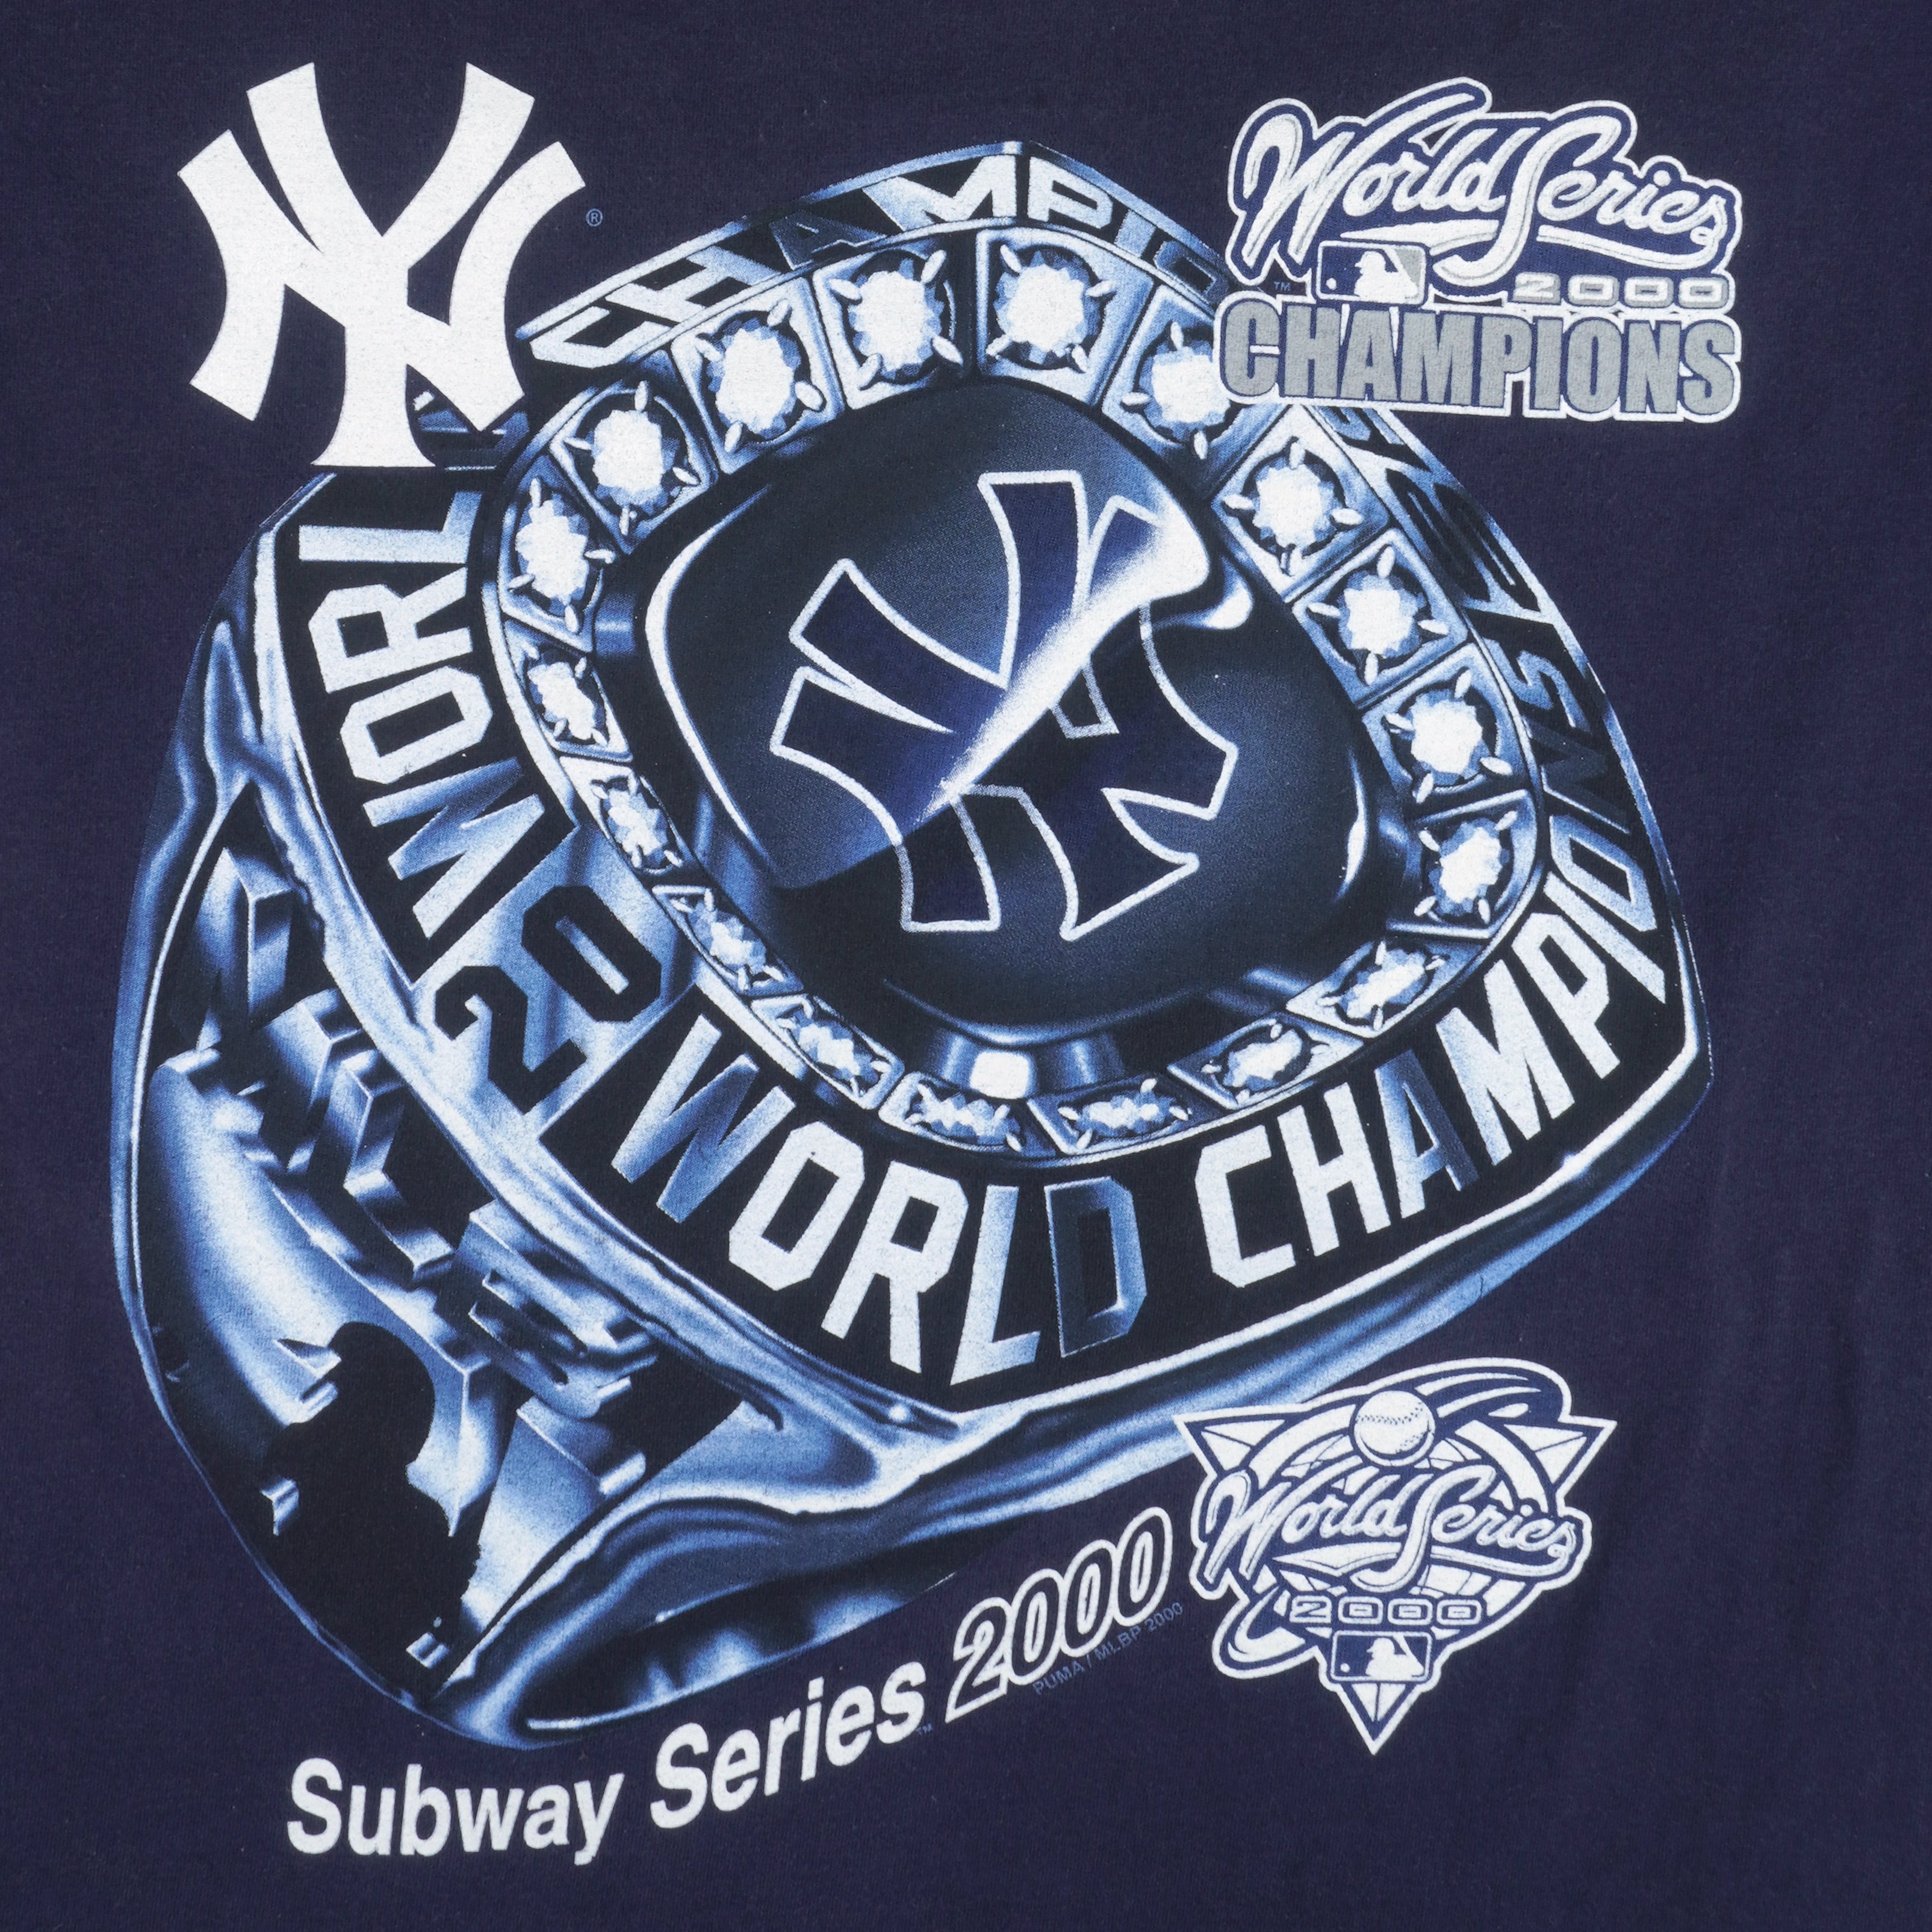 Shirts, Vintage Yankees Subway Series Tshirt